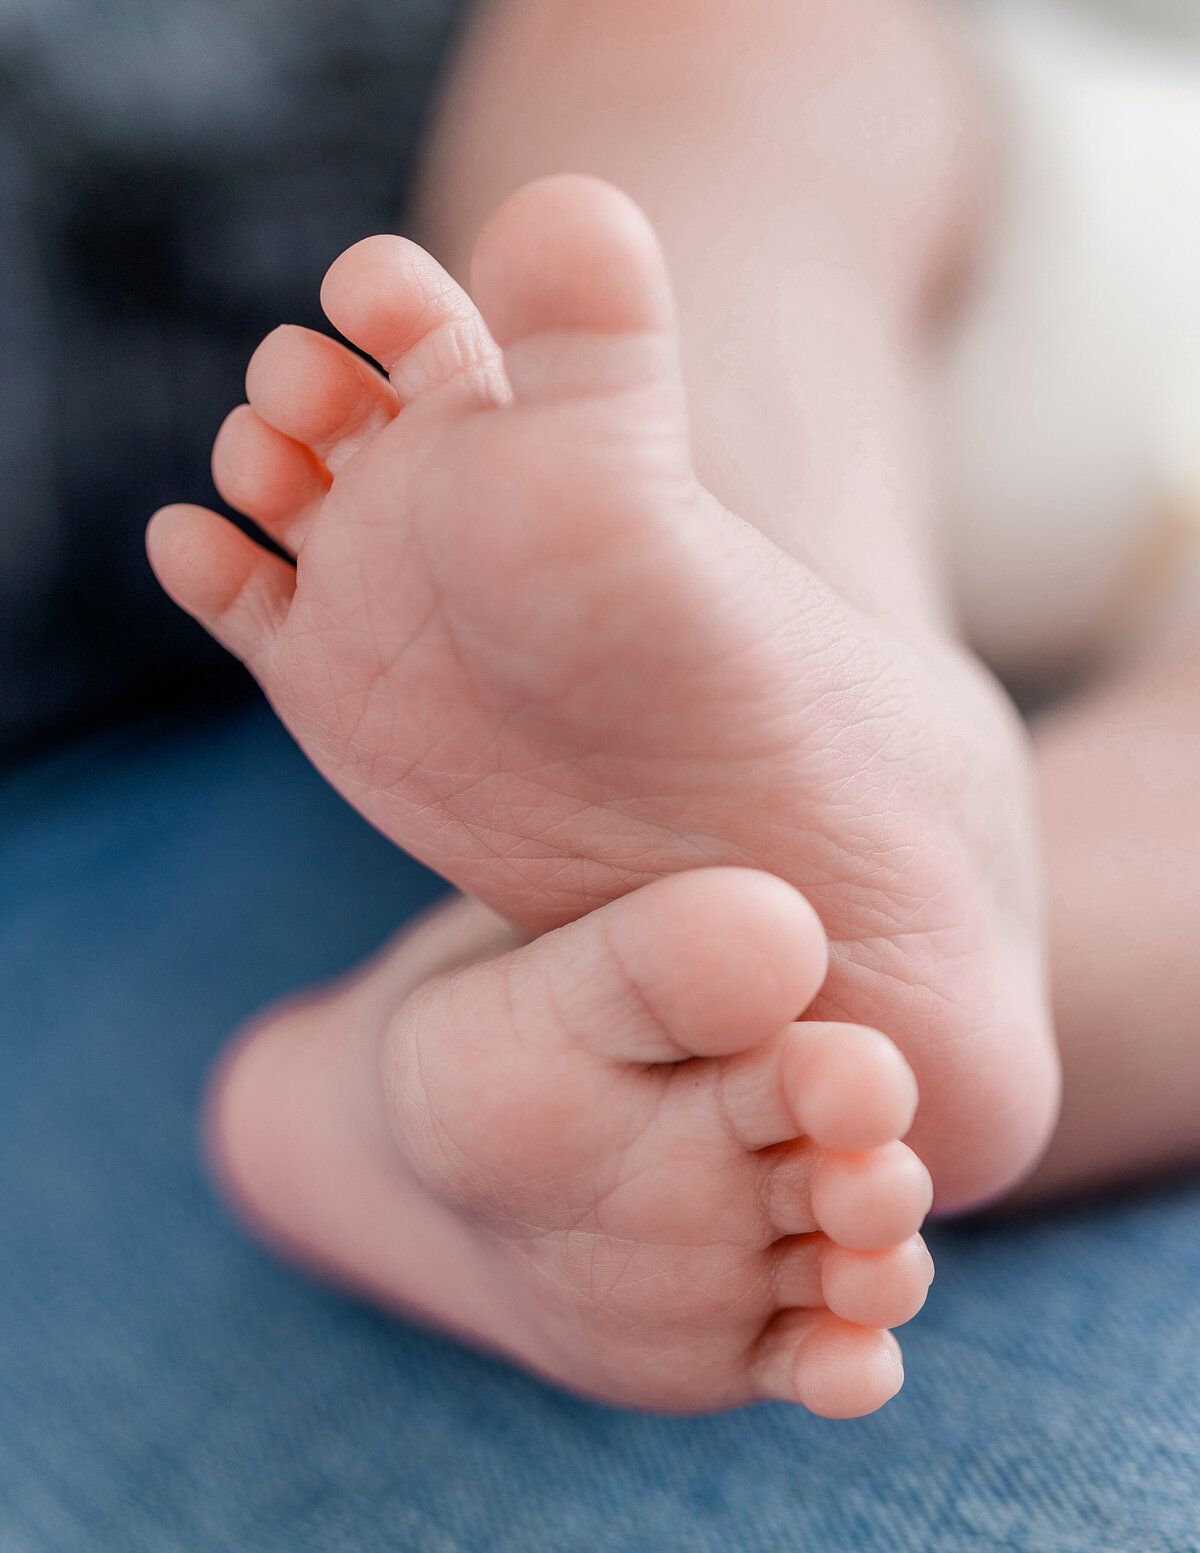 Colorado Springs Newborn Photographer - Baby feet close up